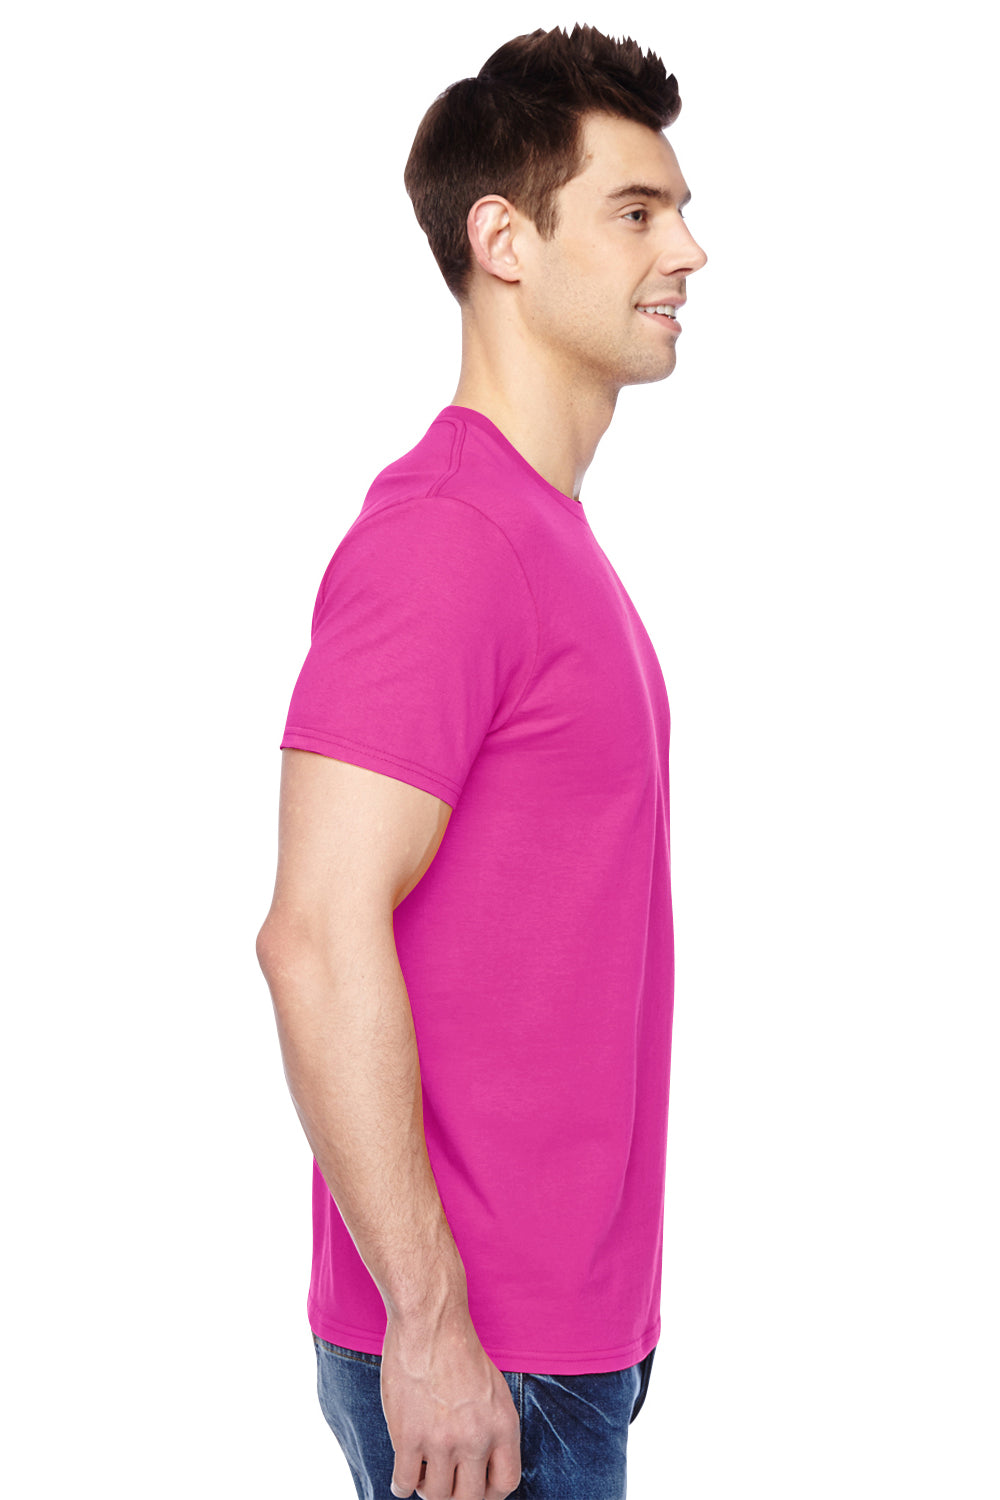 Fruit Of The Loom SF45R Mens Sofspun Jersey Short Sleeve Crewneck T-Shirt Cyber Pink Side